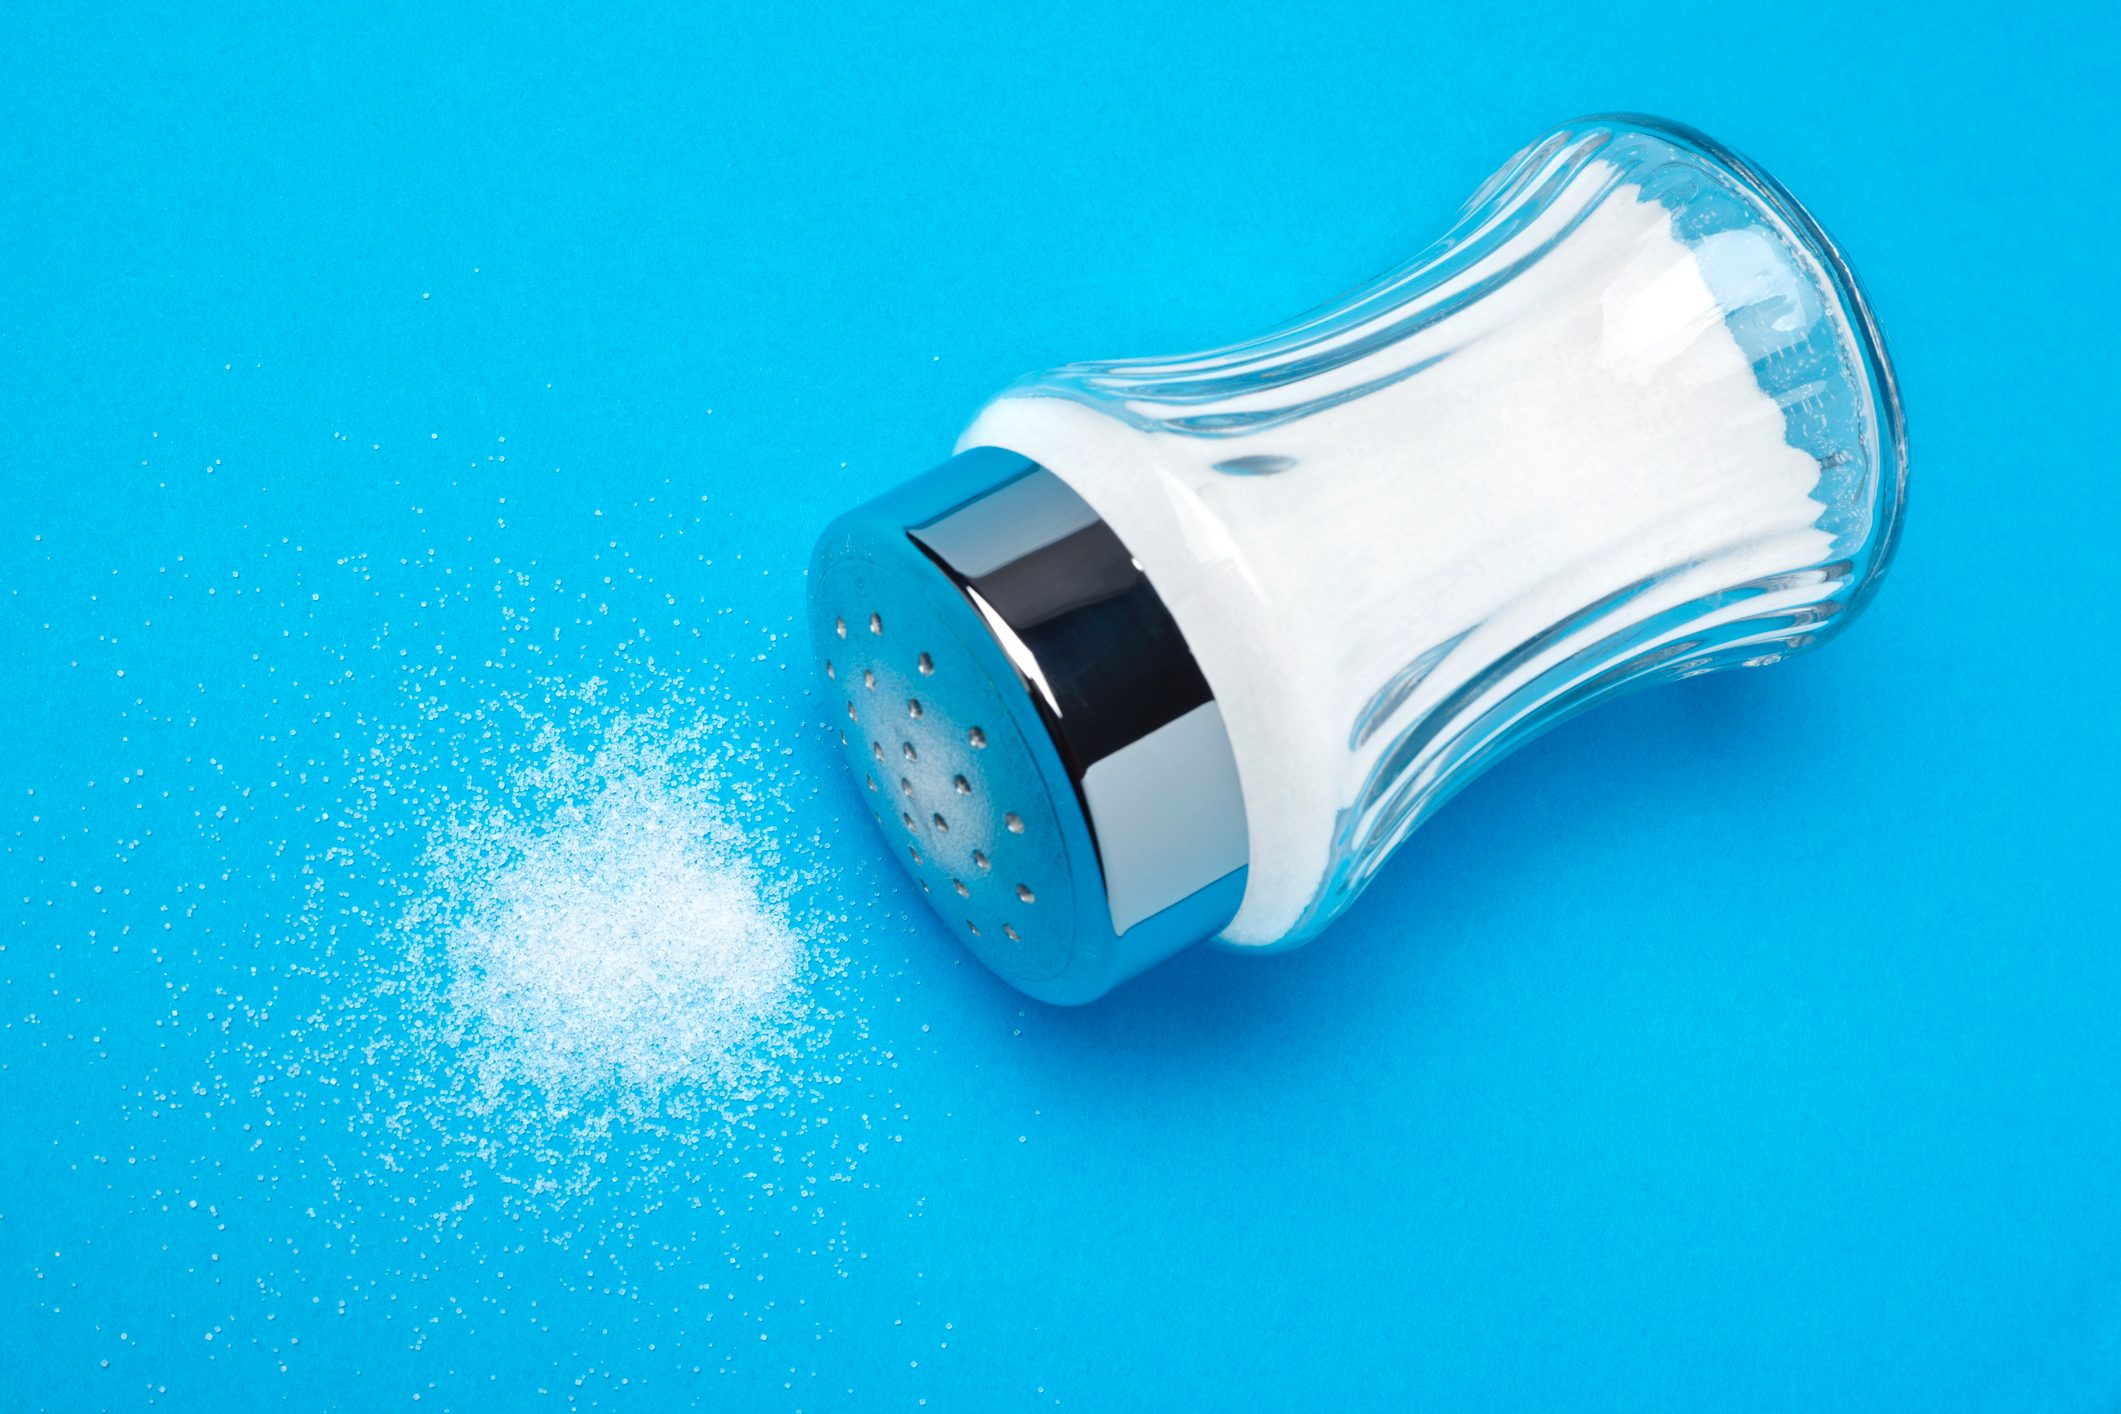 Spilled salt